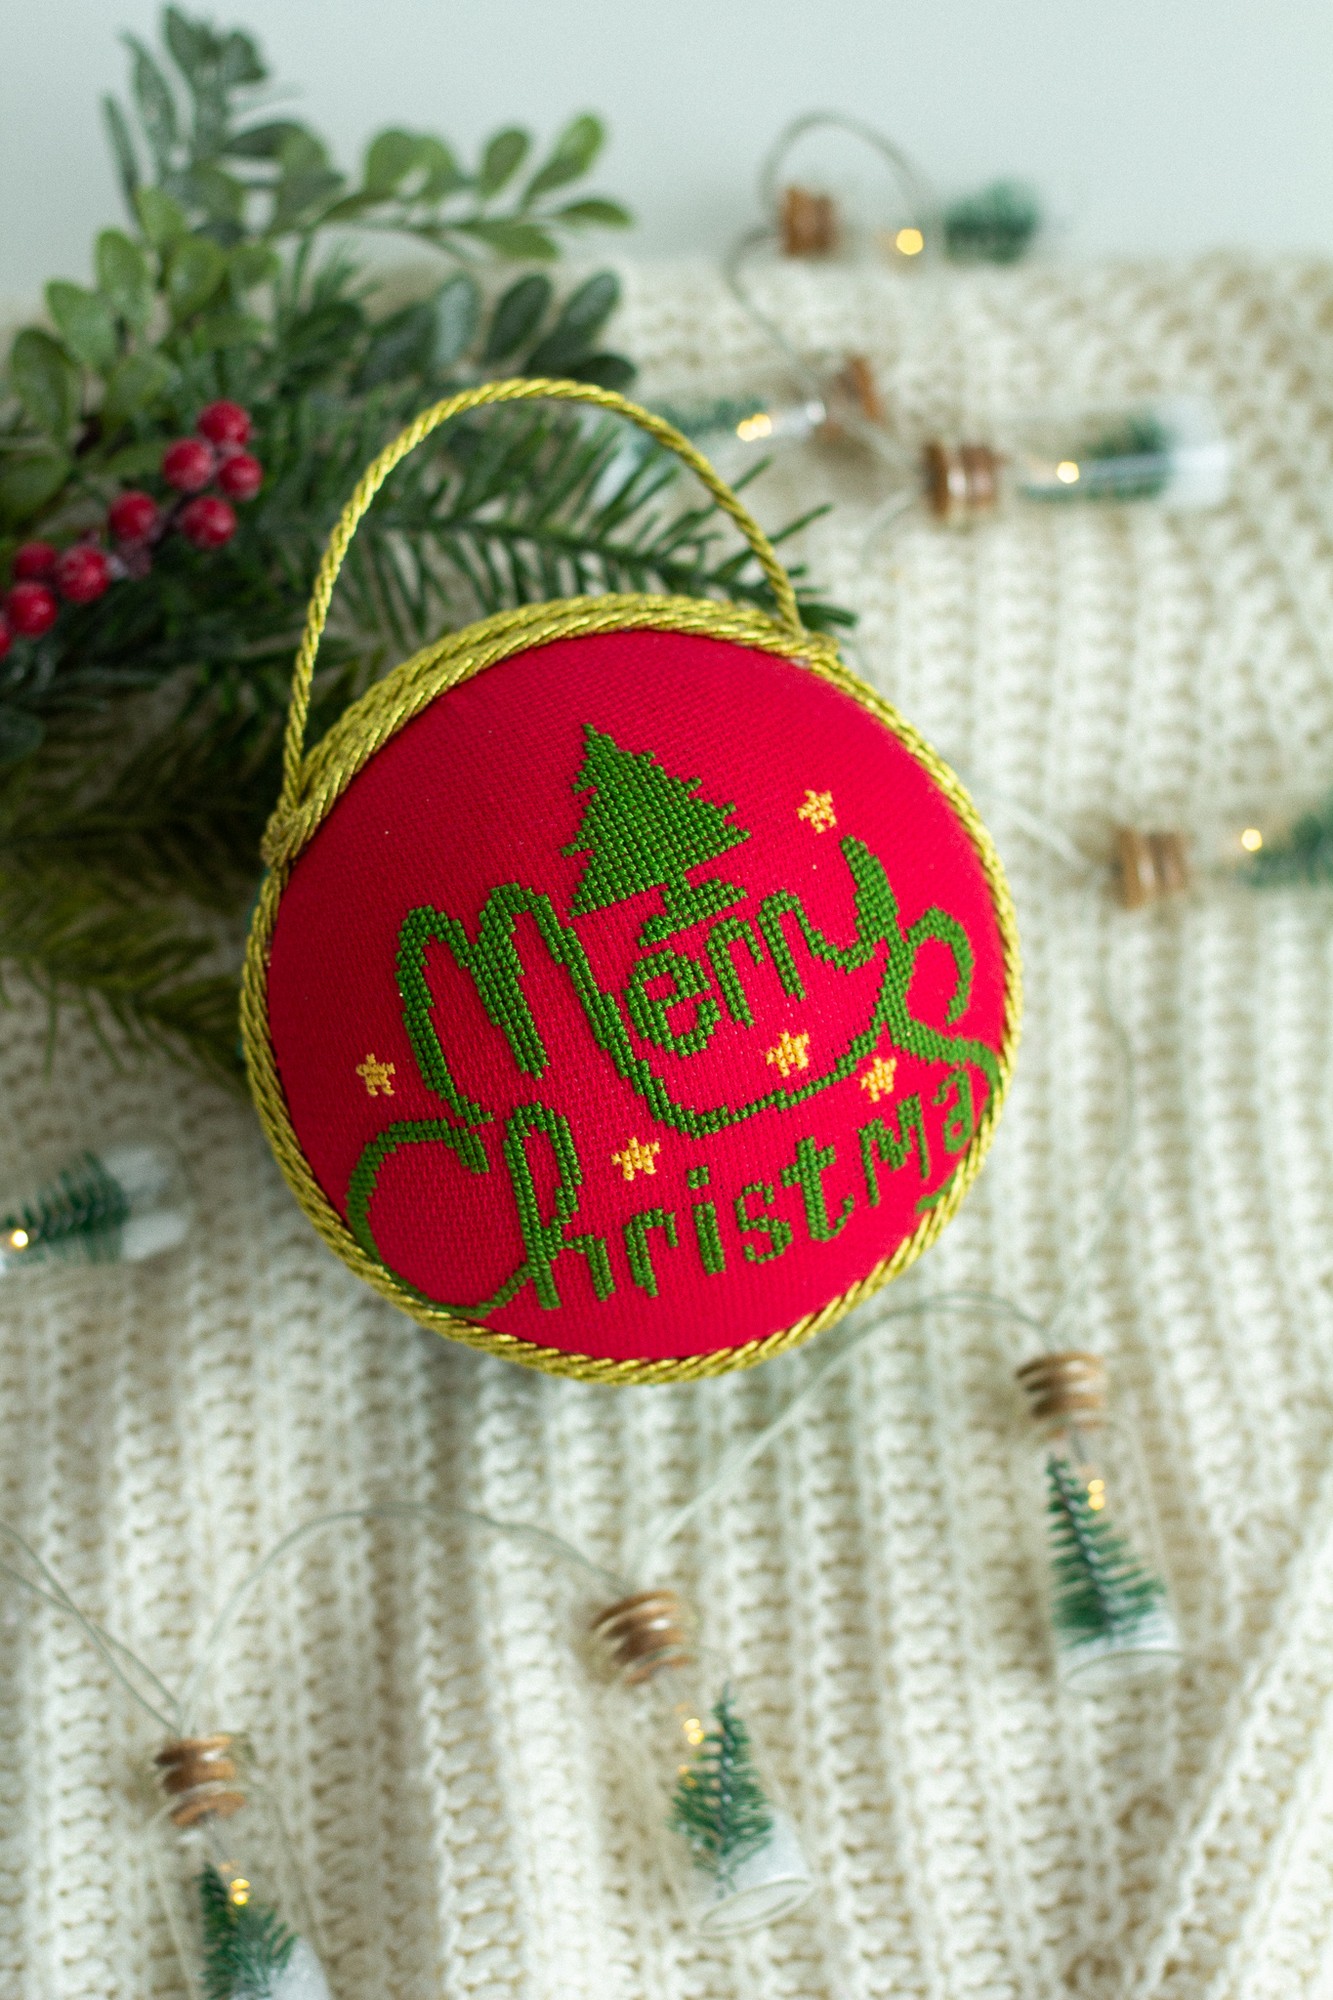 Big Christmas ball with cross stitch